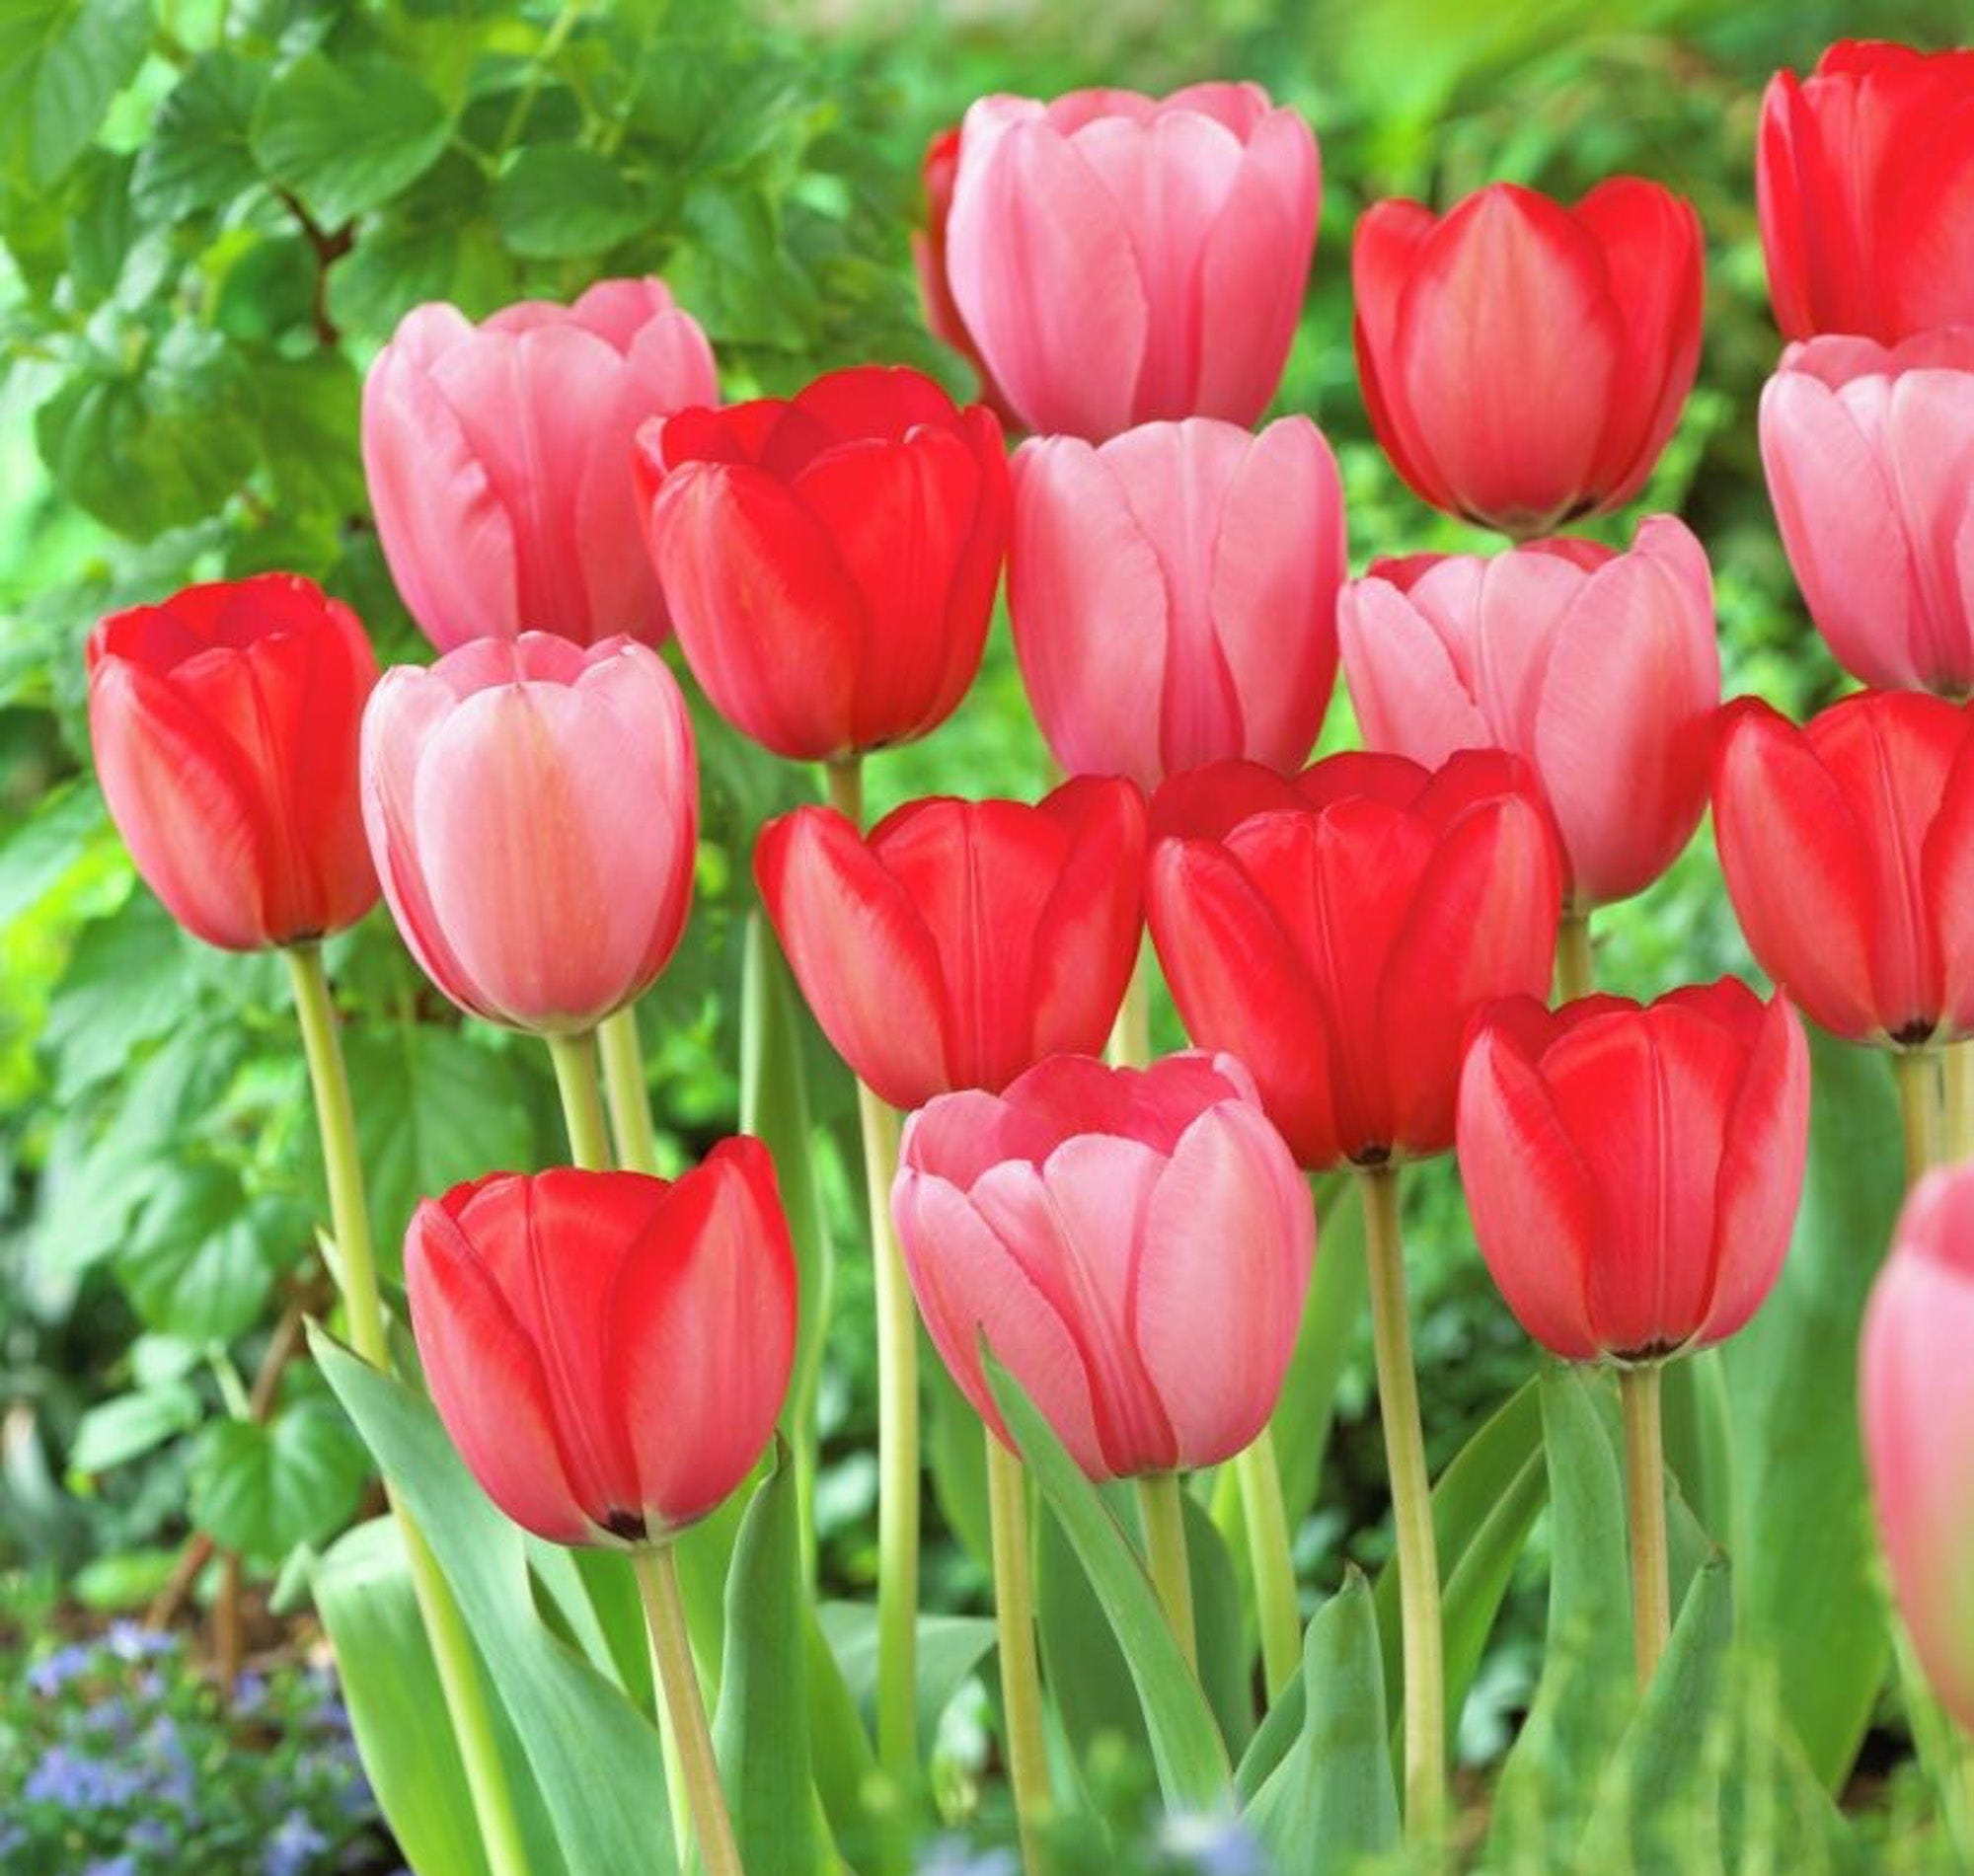 'Impression Kiss' tulipanblanding